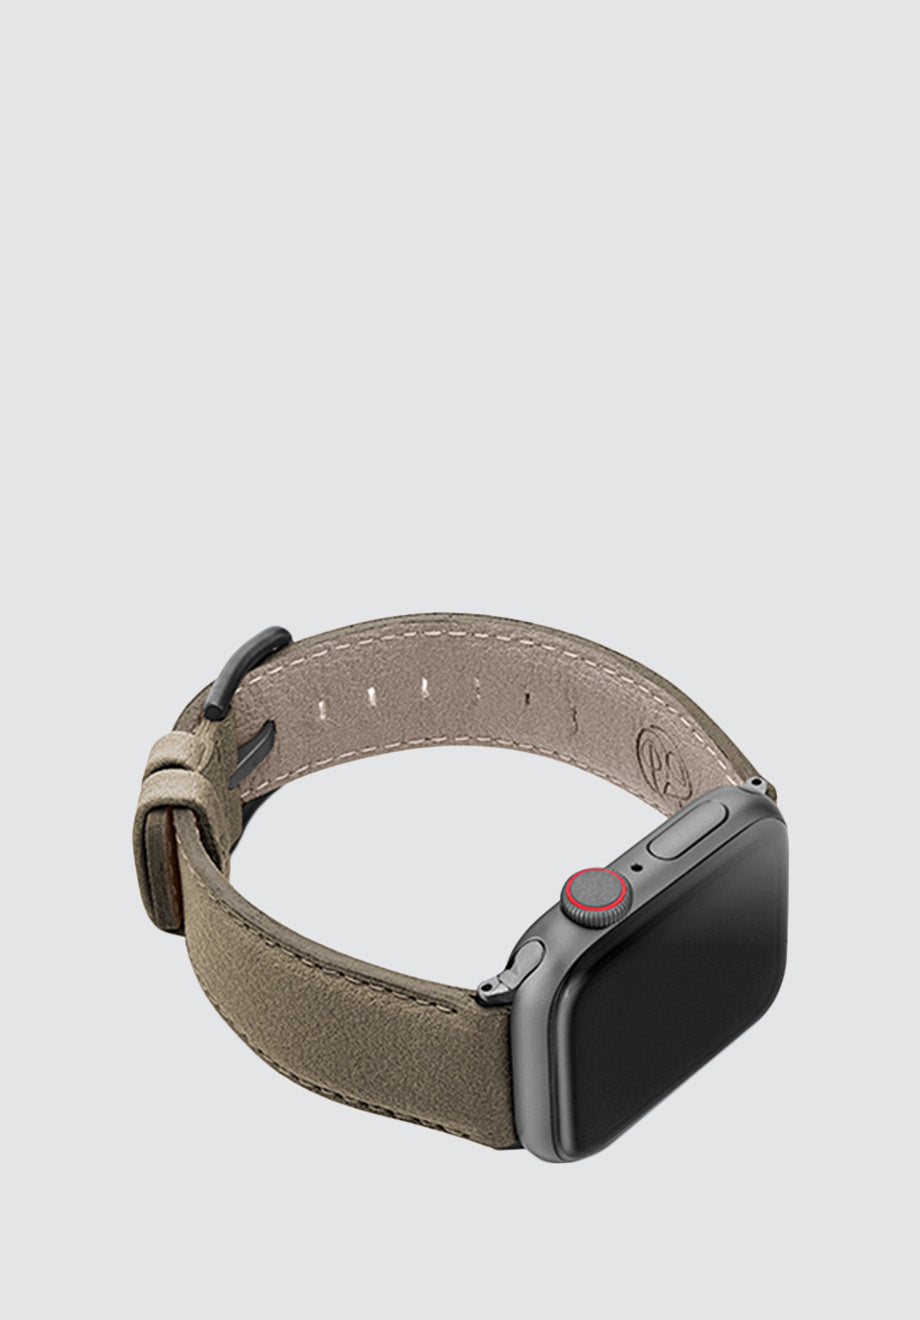 Strudel Apple Watch Band